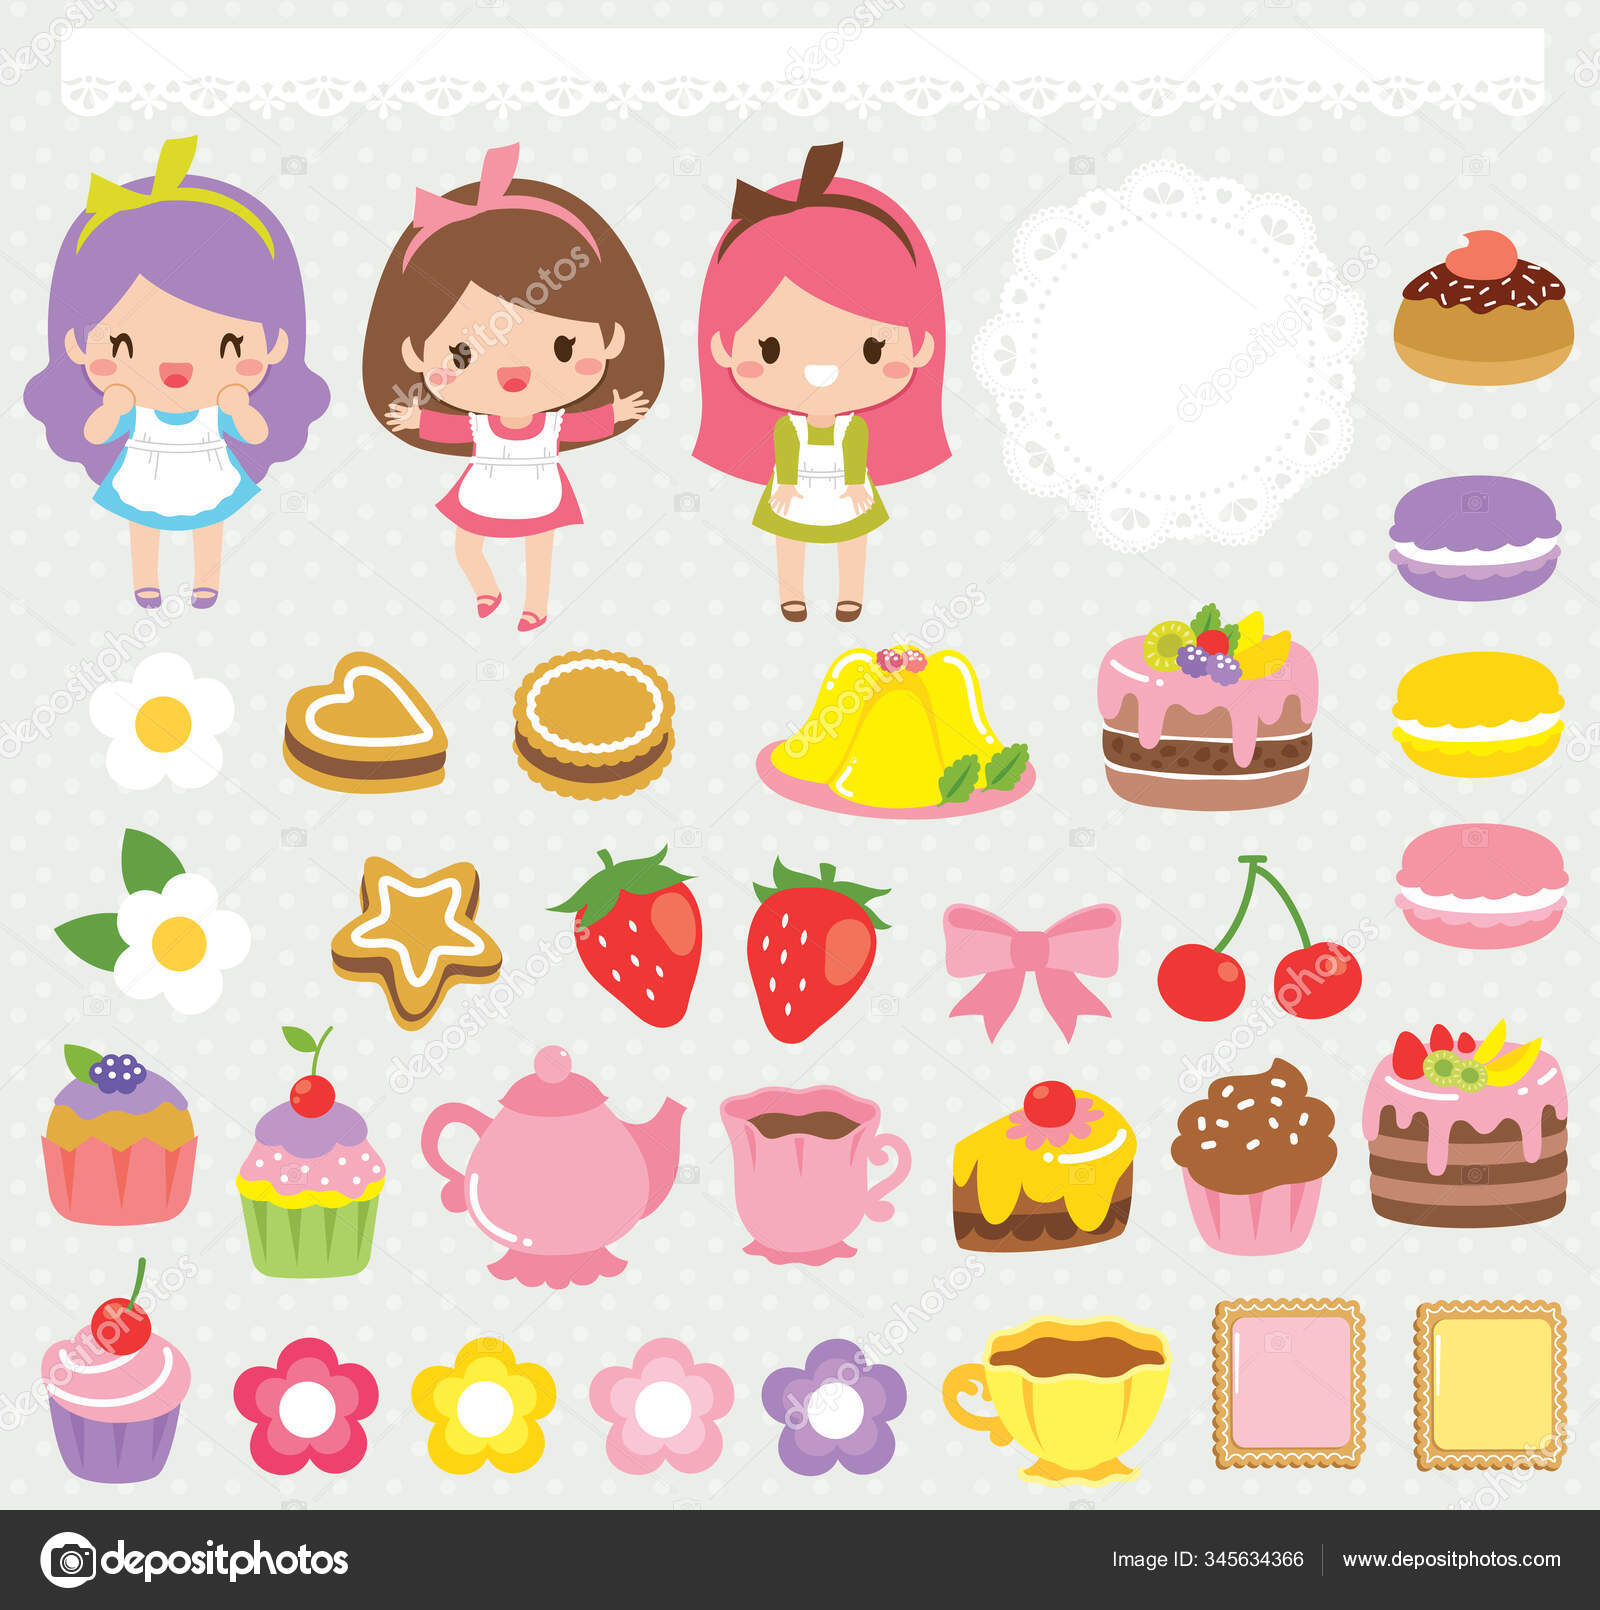 https://st3.depositphotos.com/1667027/34563/v/1600/depositphotos_345634366-stock-illustration-cute-food-clipart-set-girls.jpg